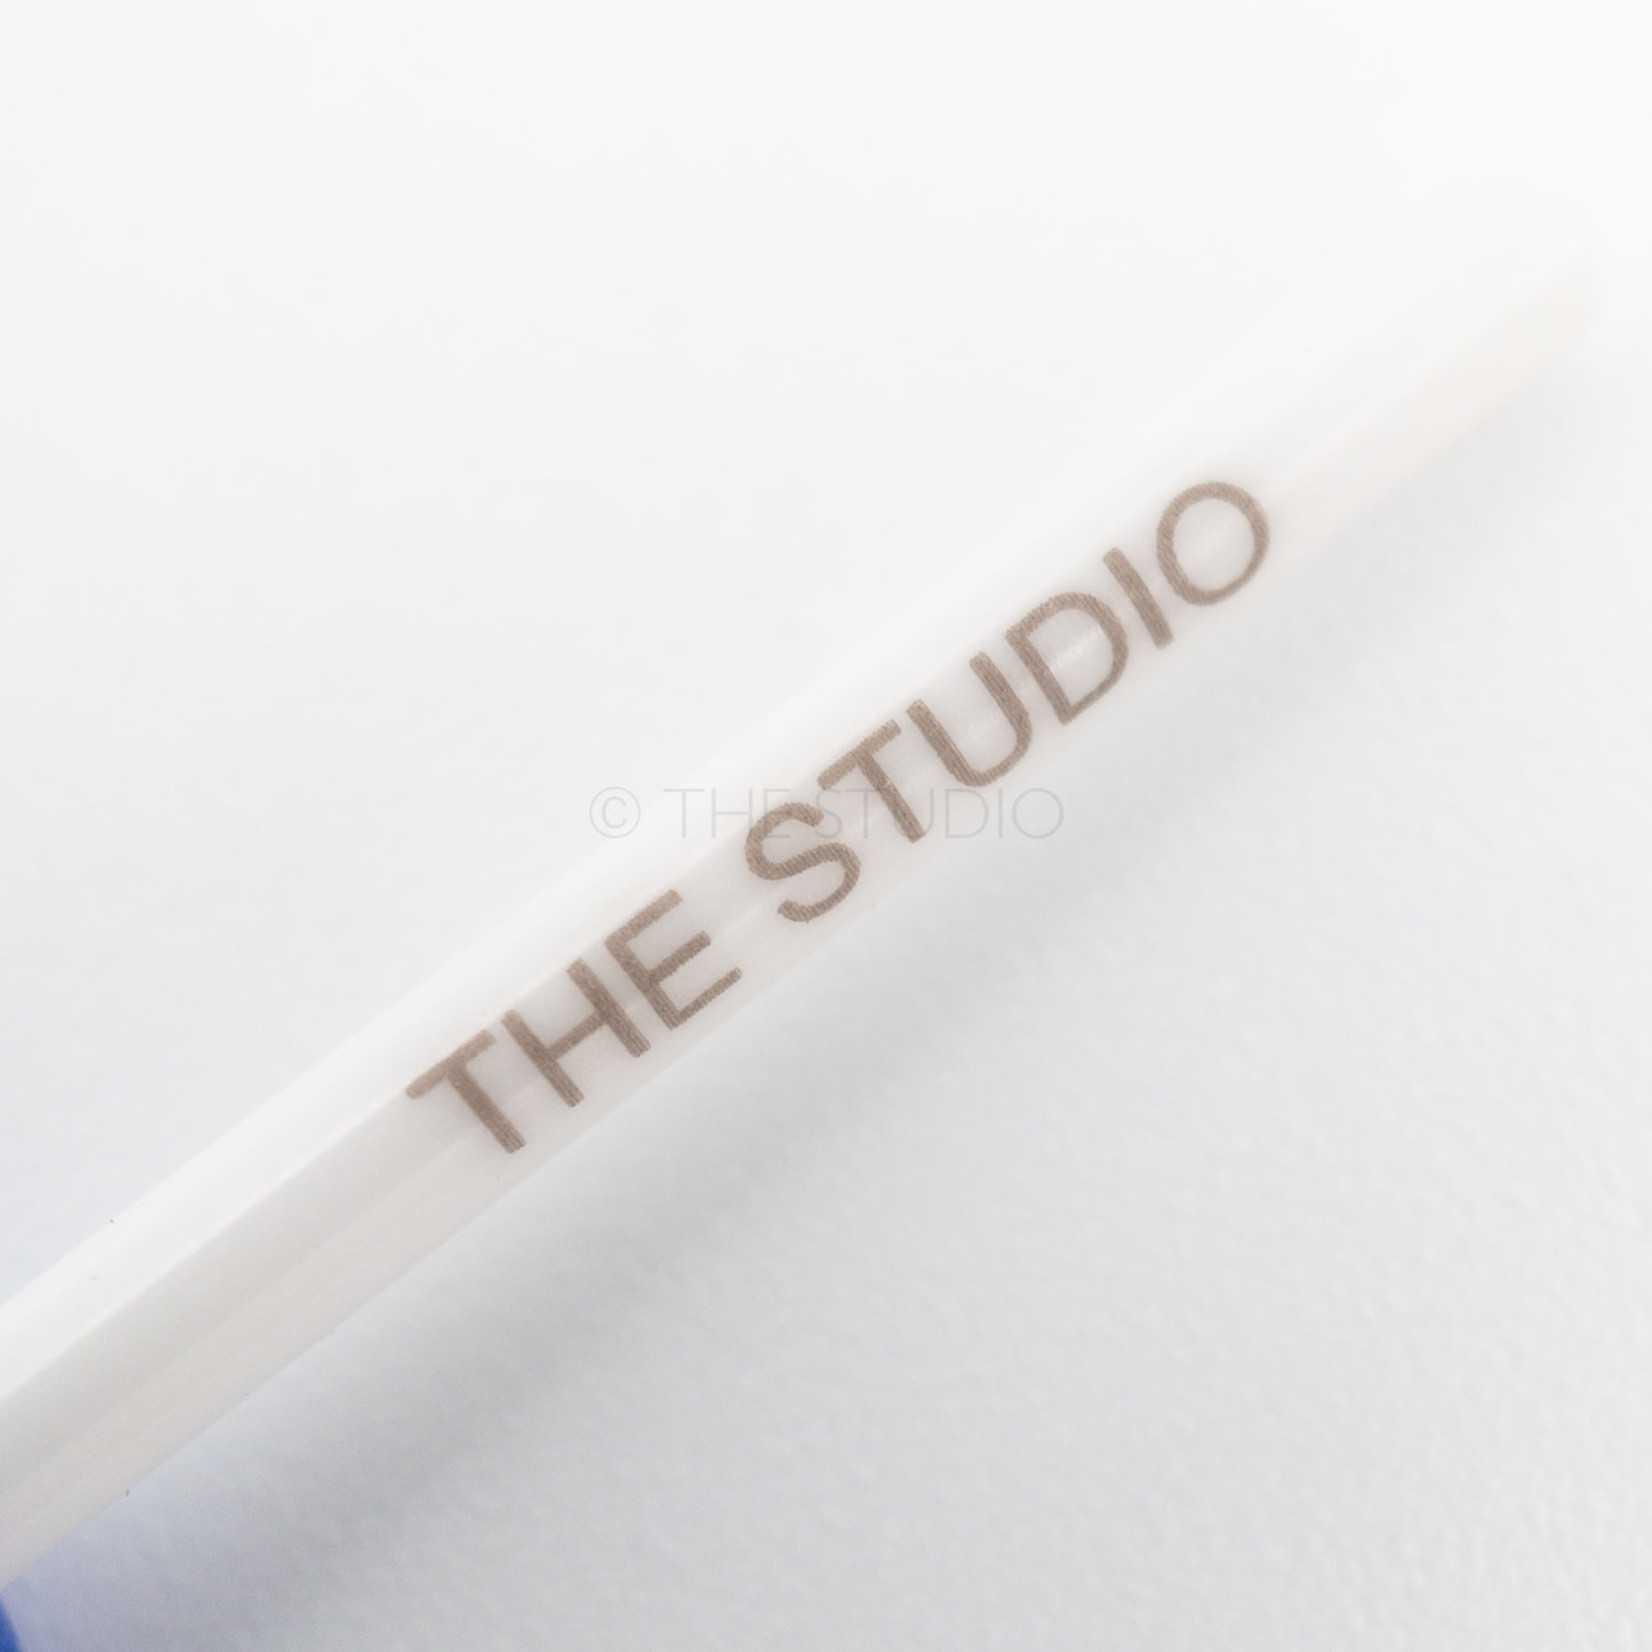 The Studio The Studio - Bit - Needle - Ceramic